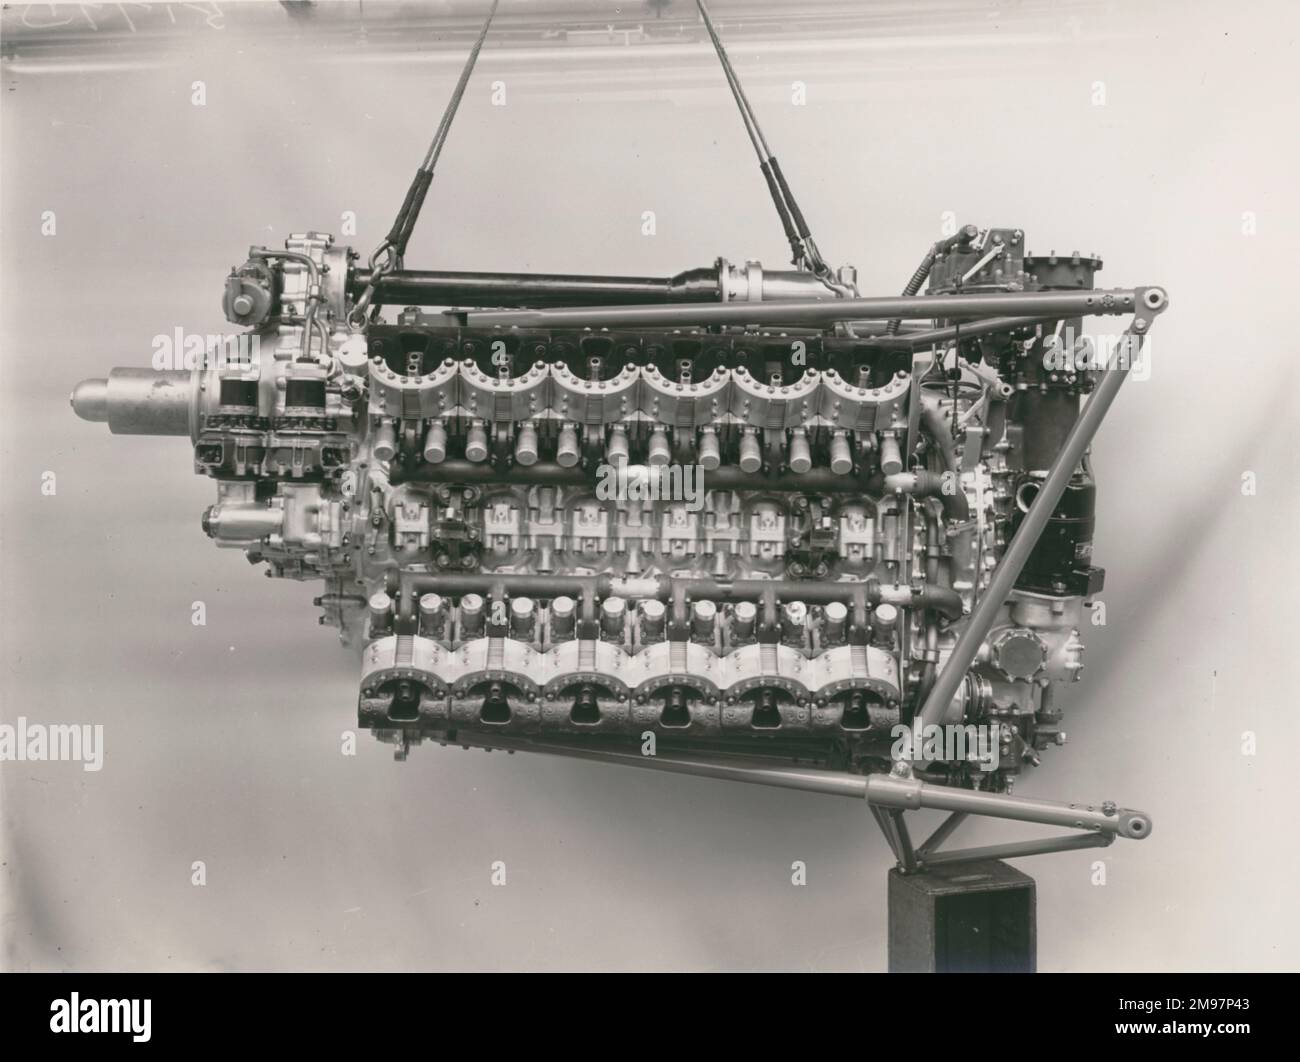 Rolls-Royce Exe 24-cylinder, air-cooled, X-block, sleeve-valve engine. Stock Photo